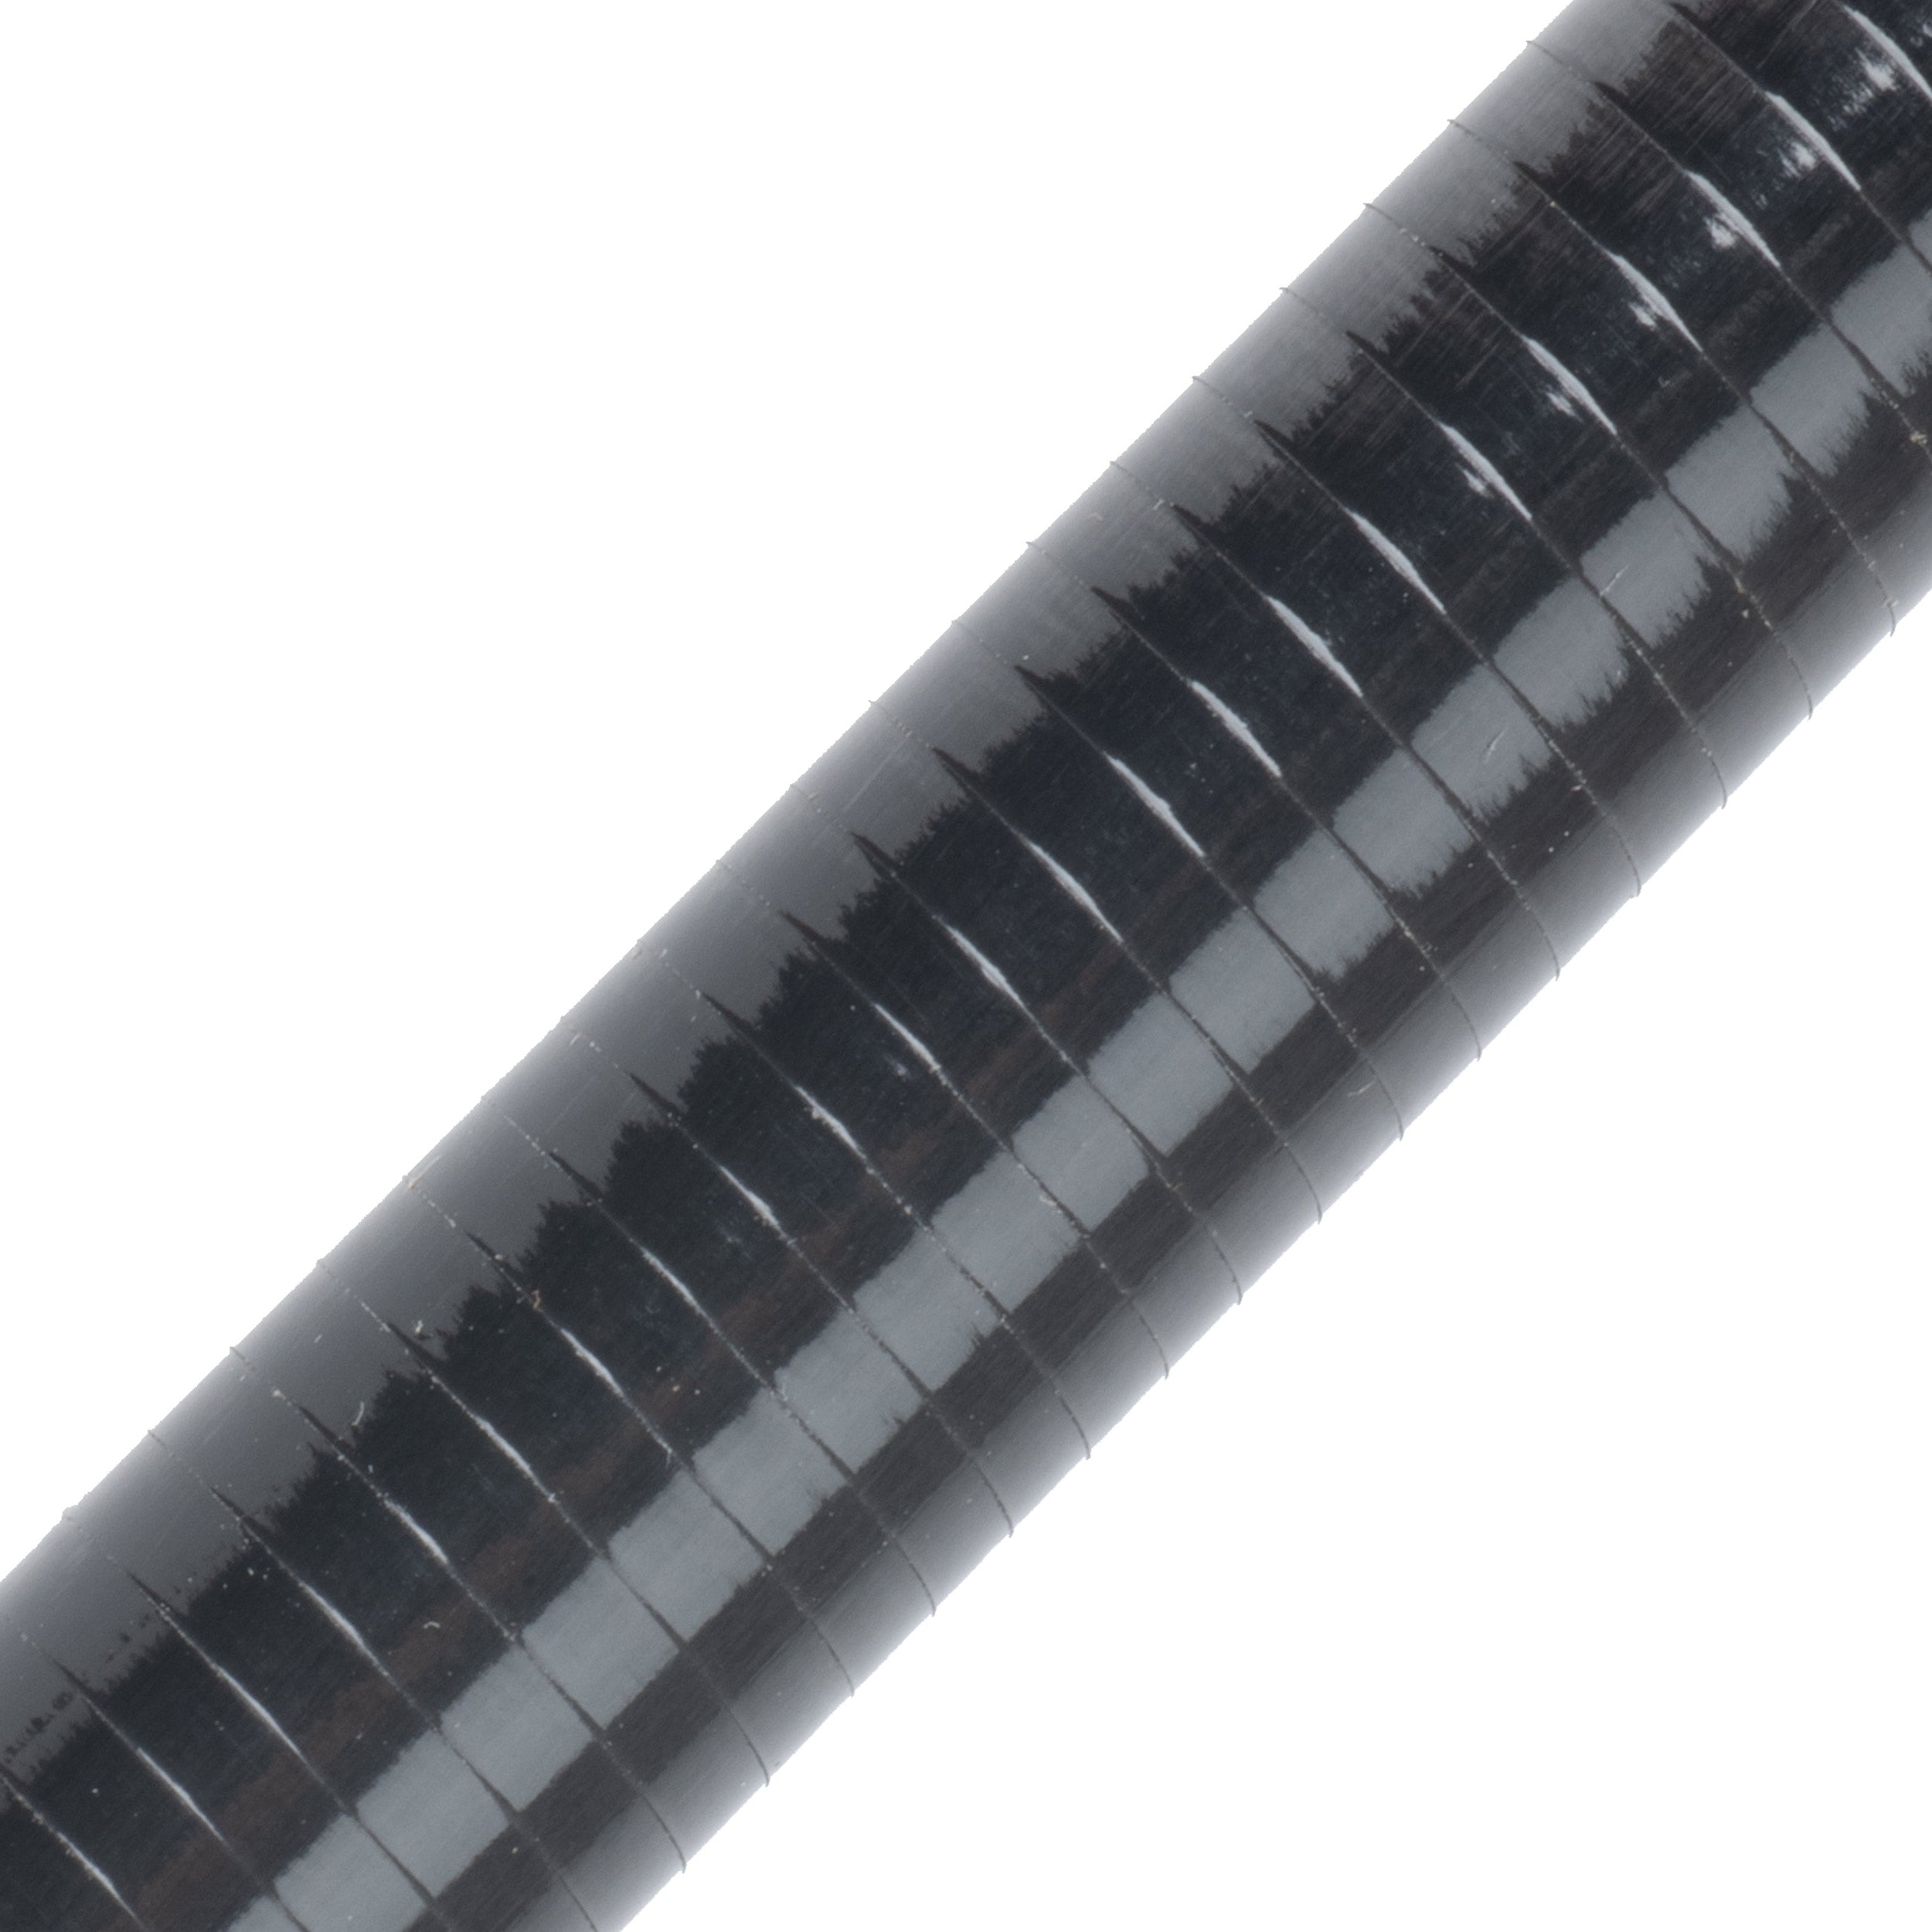 Cashion CR6r Carbon Fiber Mag Bass Rod Blank - CR6r-iMB844